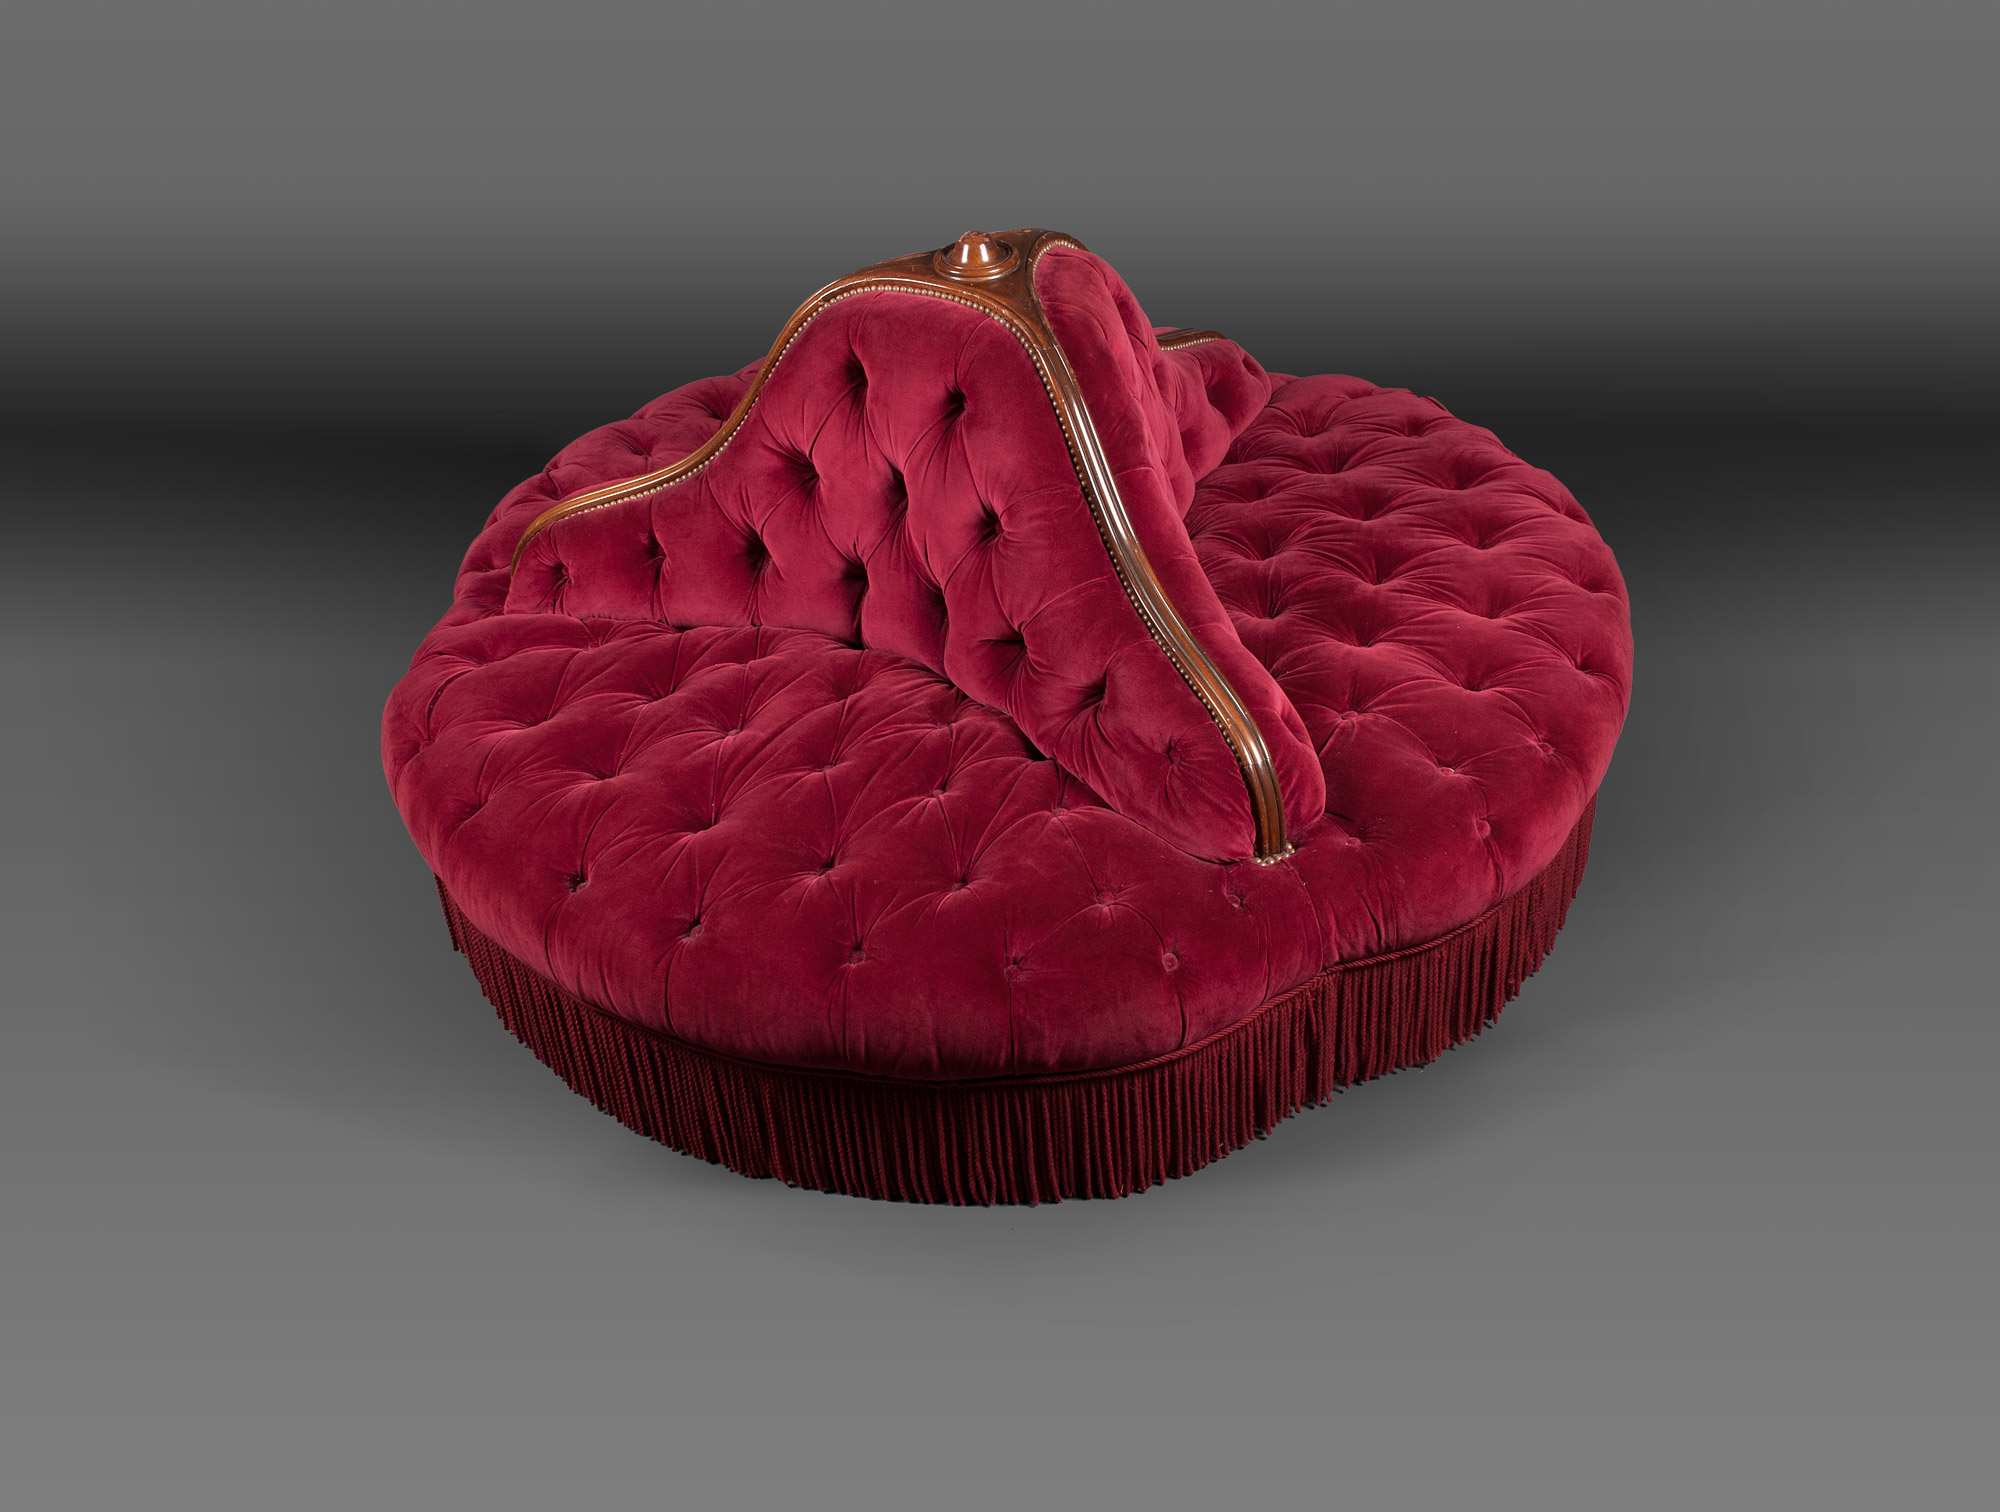 infierno Incierto A través de Terminal red velvet padded Soubrier - Rent Seats Sofa Napoleon III